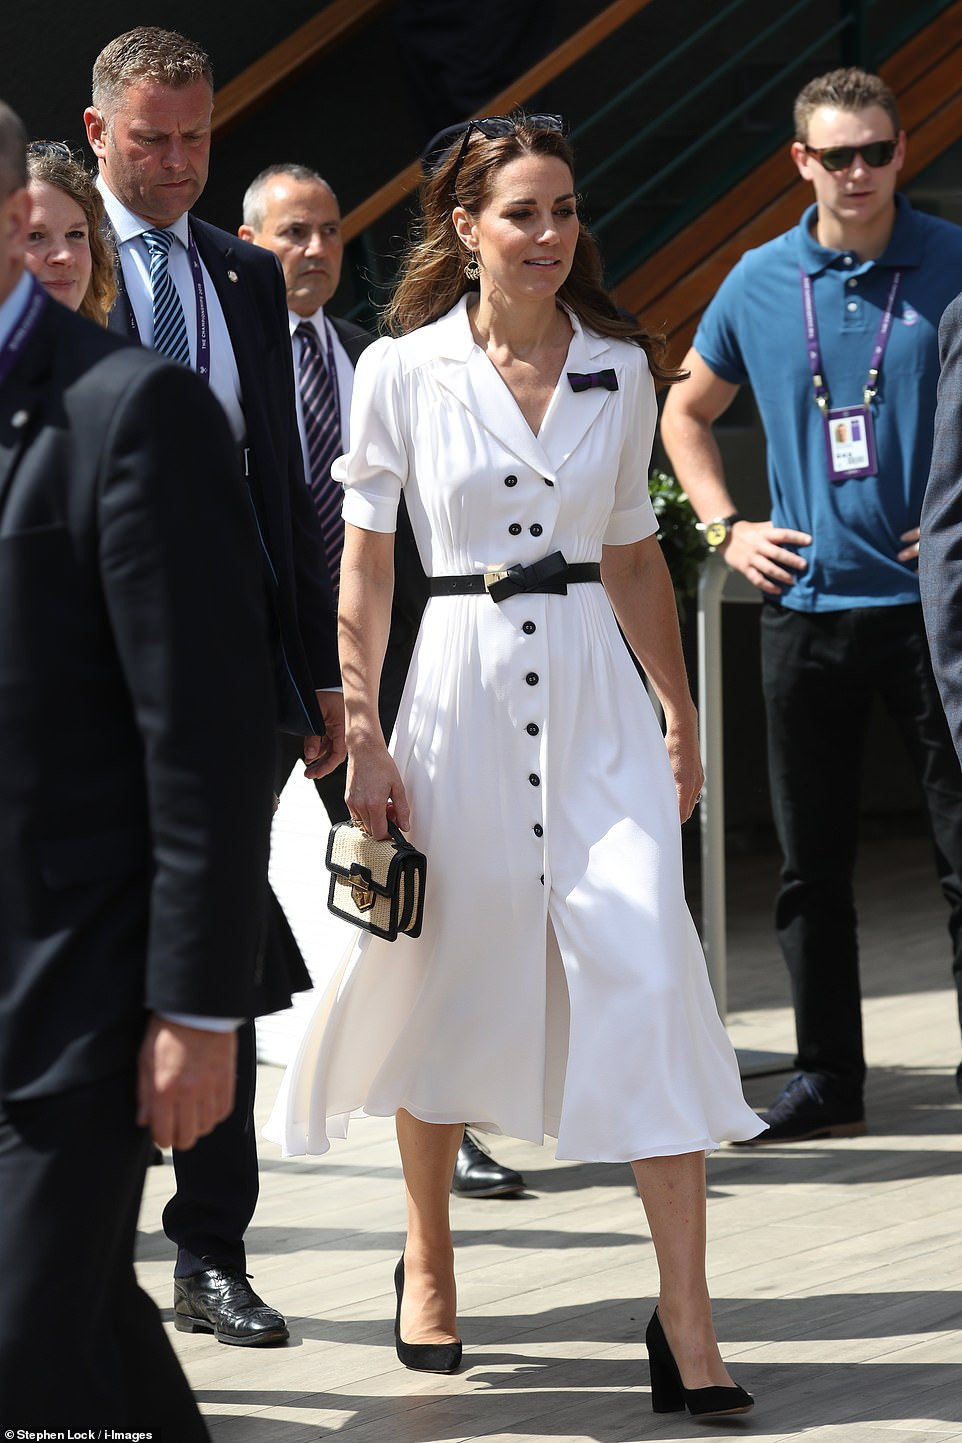 Кэтрин, герцогиня Кембриджская (Catherine, Duchess of Cambridge)